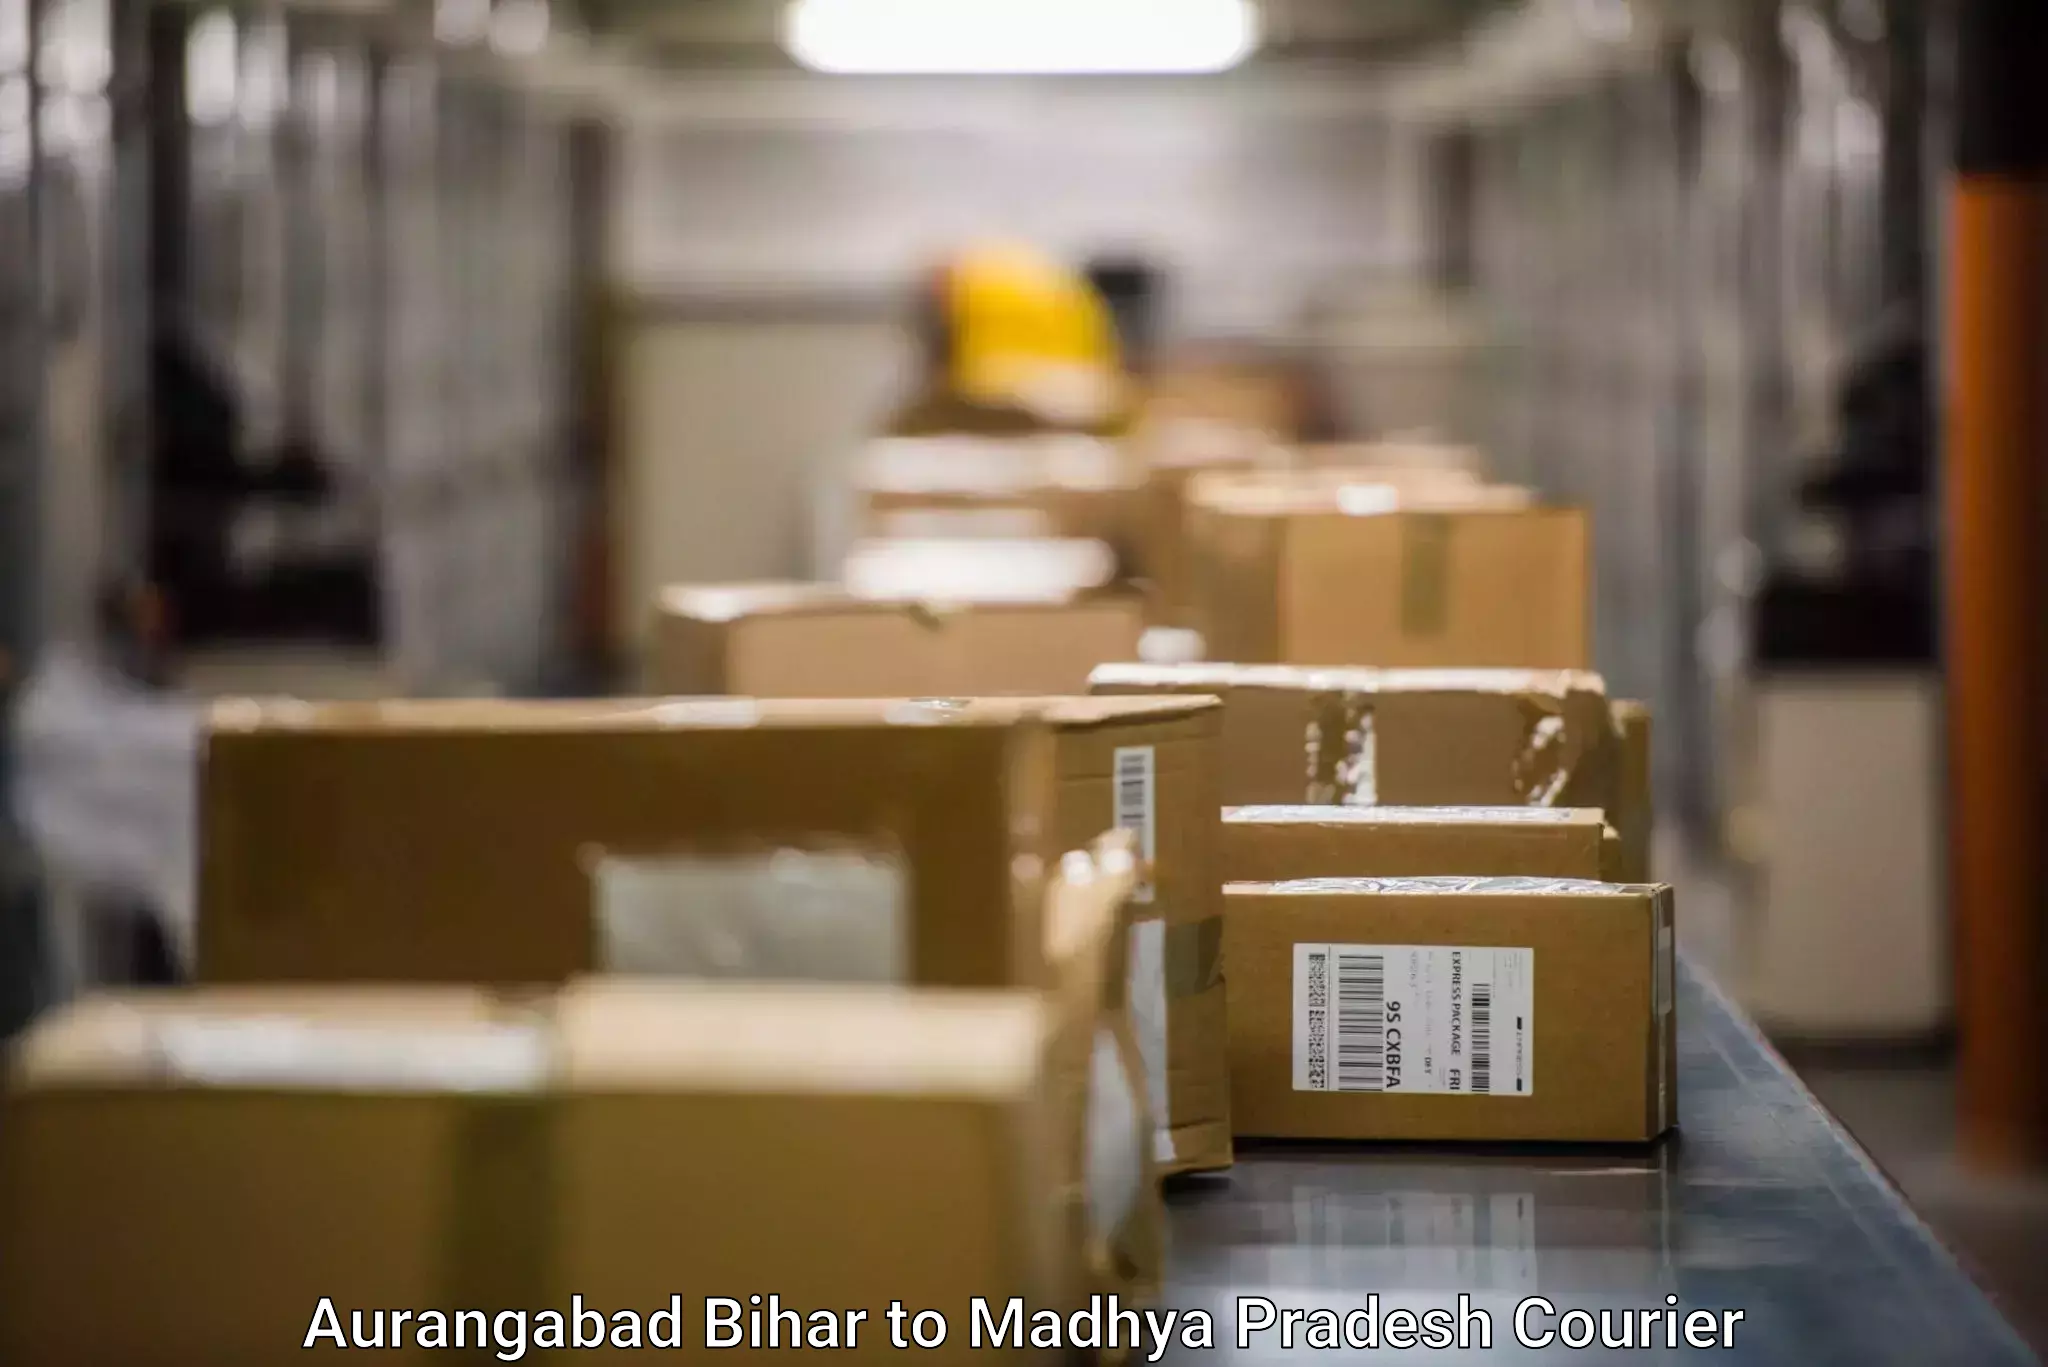 Tailored shipping plans Aurangabad Bihar to Ujjain